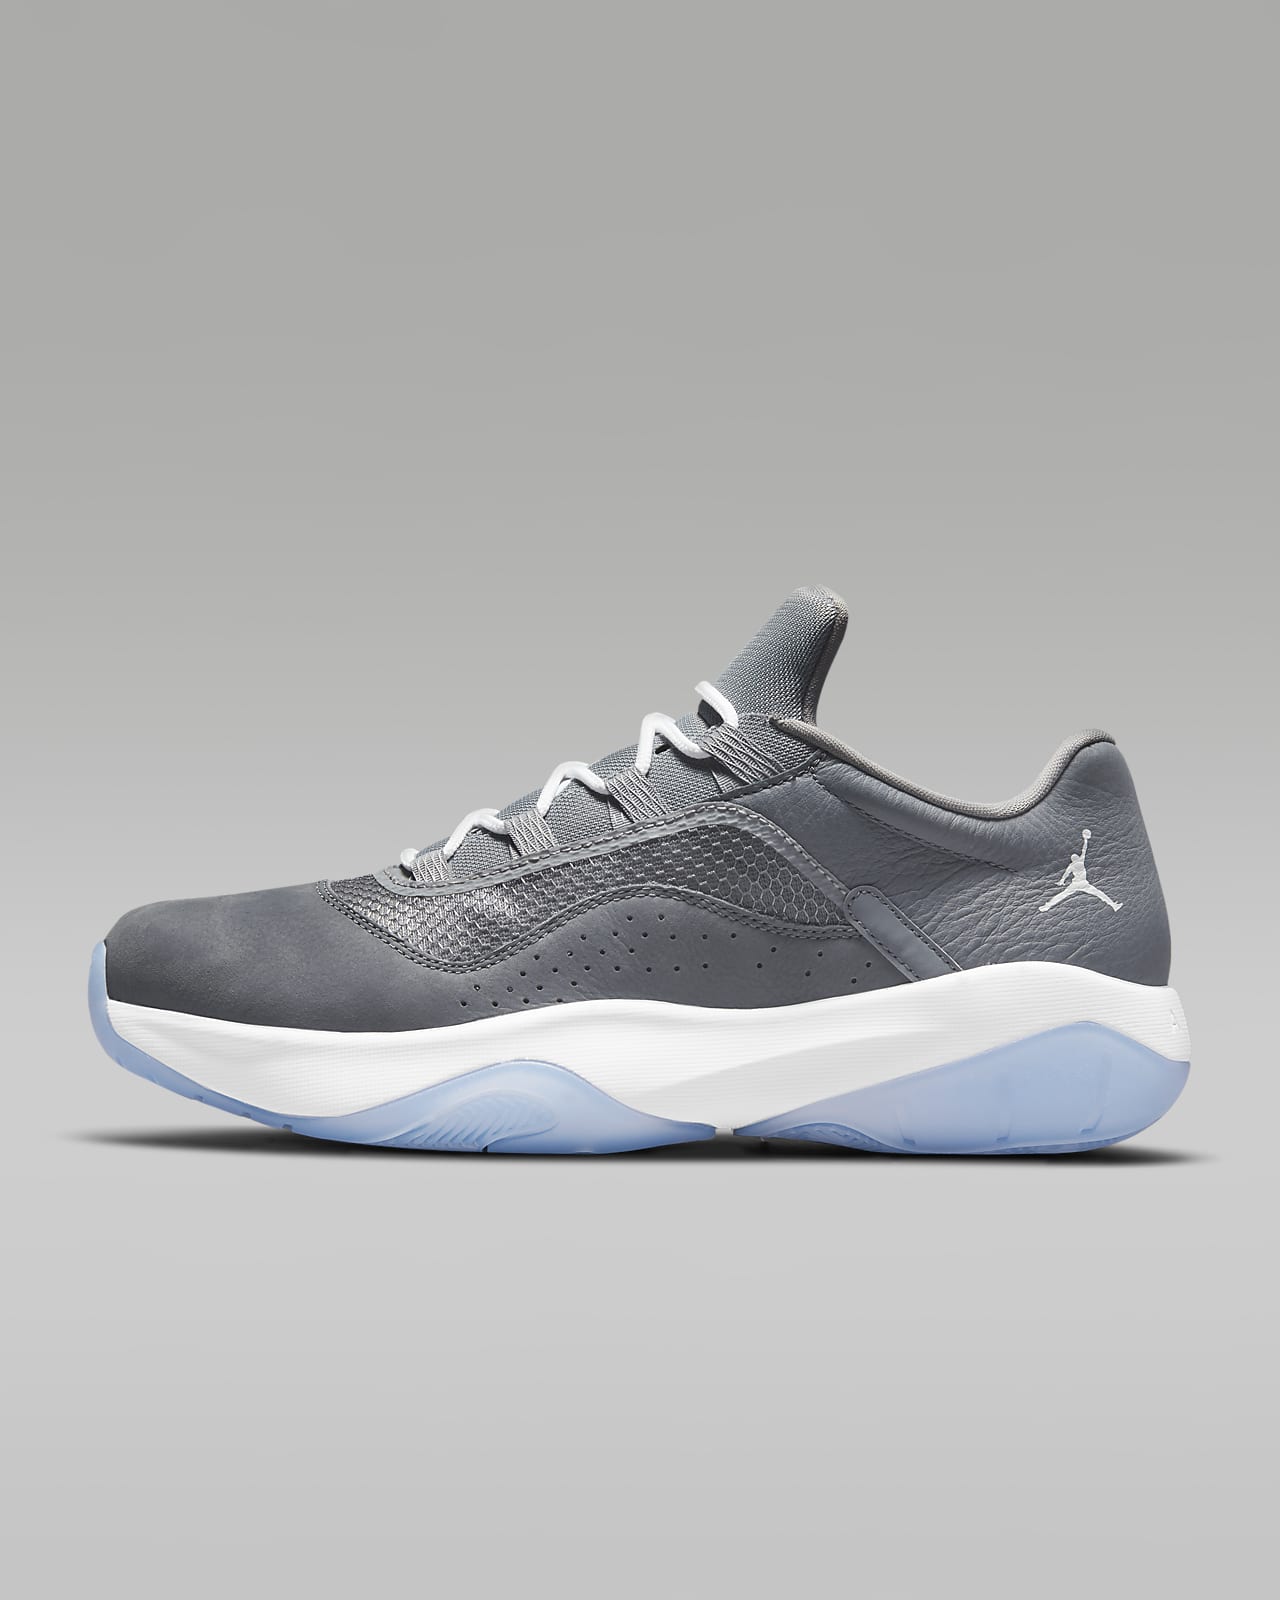 Men's Jordan Trainers & Shoes. Nike IE